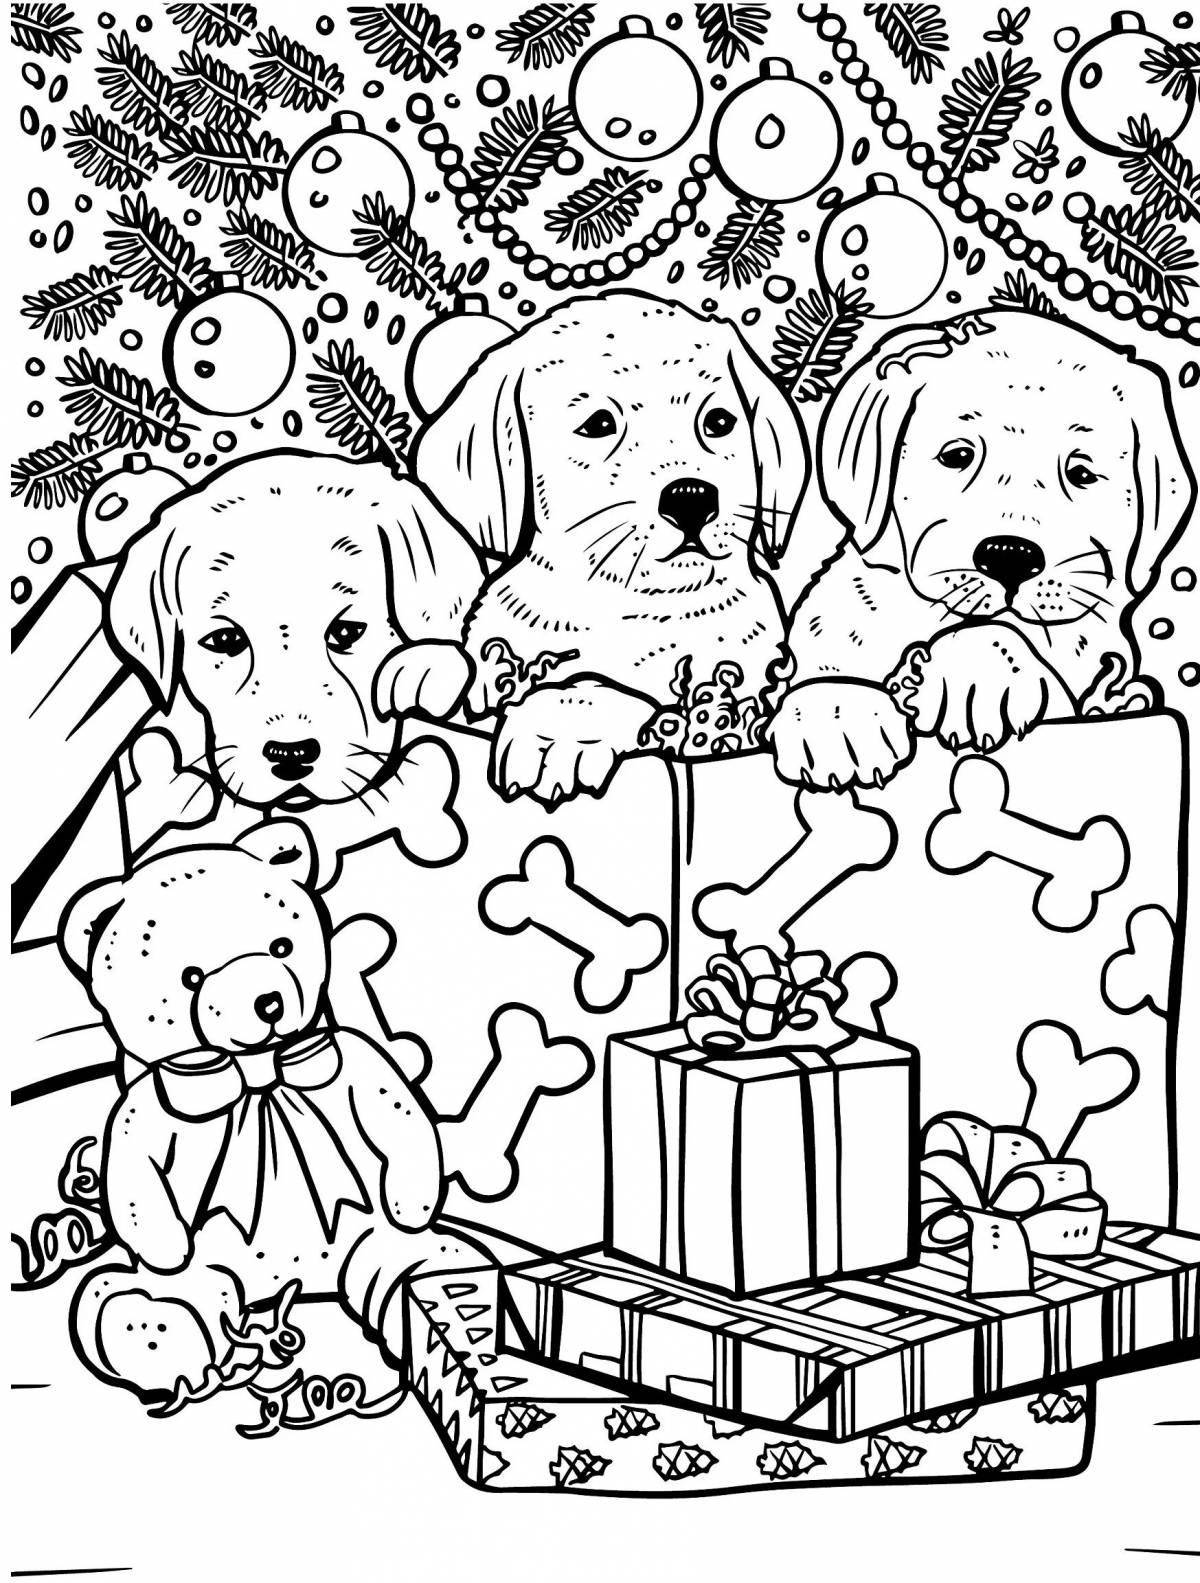 Coloring page elegant christmas dog